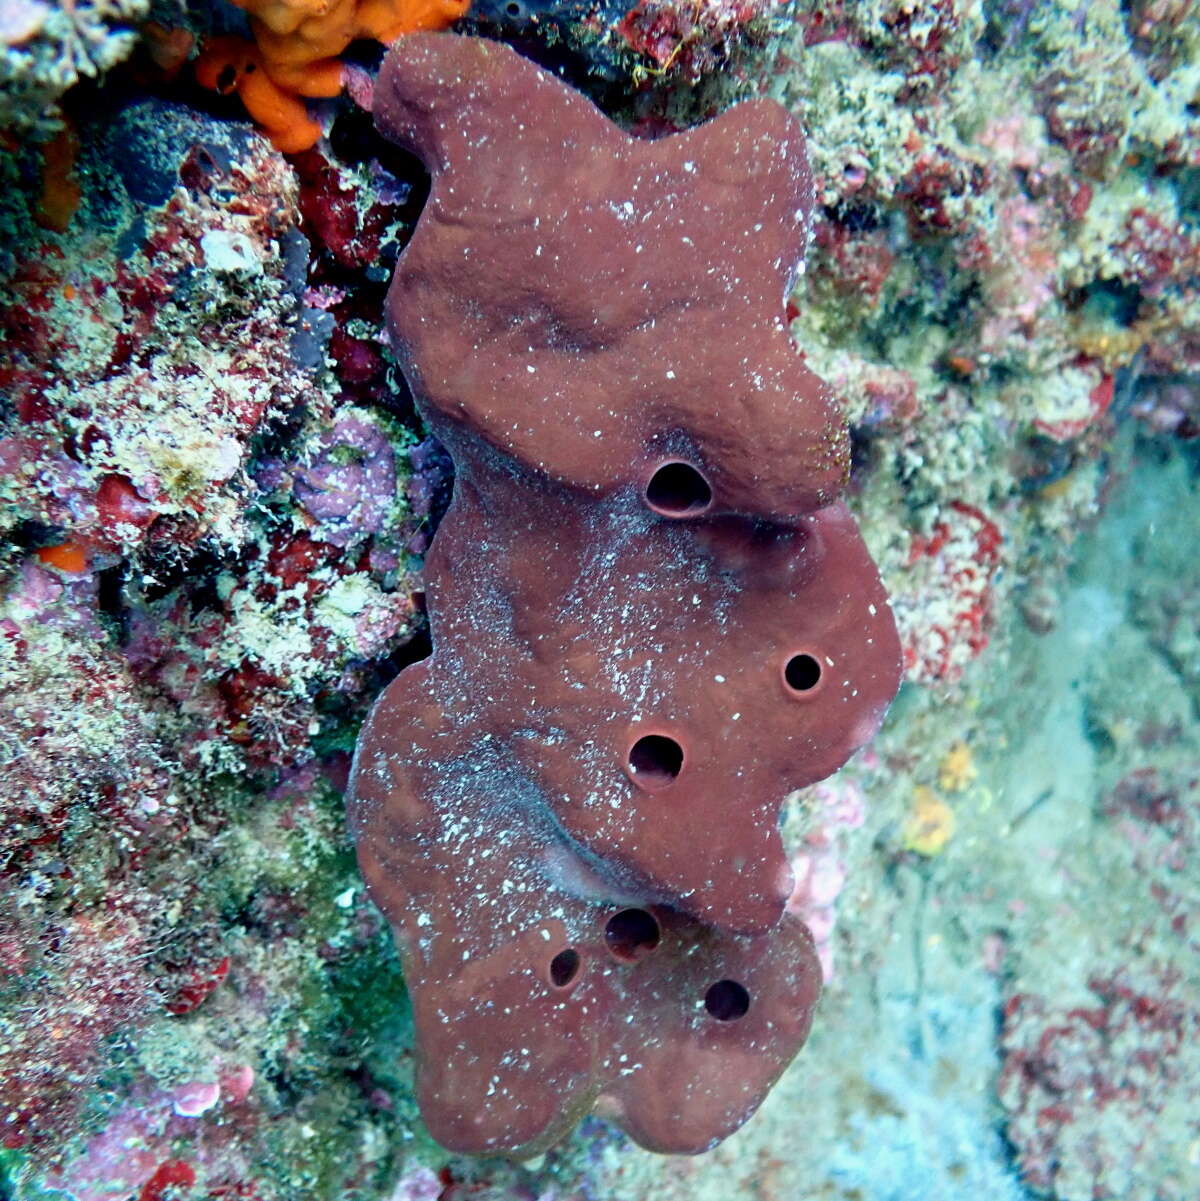 Image of stony sponge